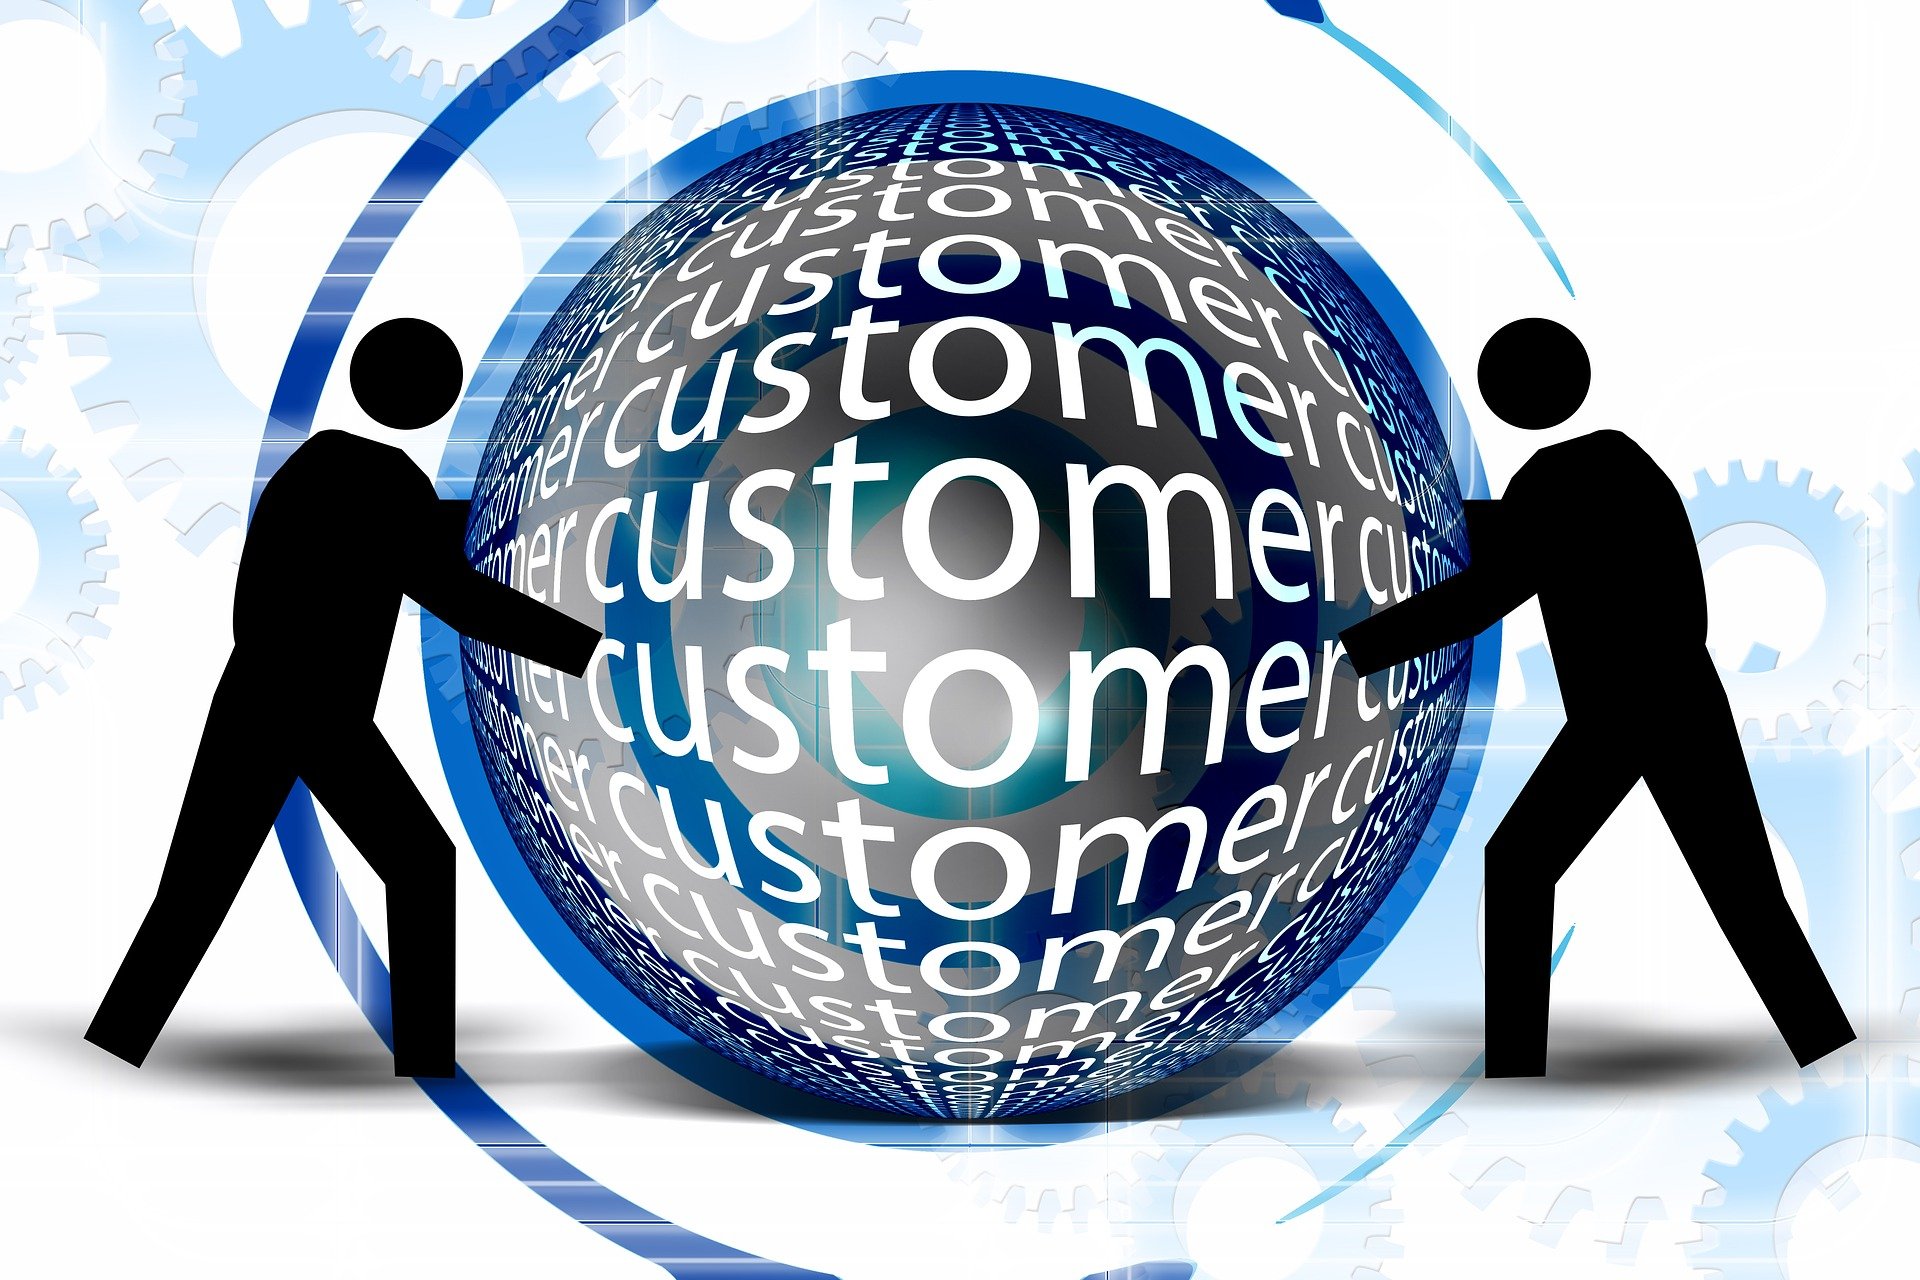 How to Optimize Customer Communications Across Customer Journeys